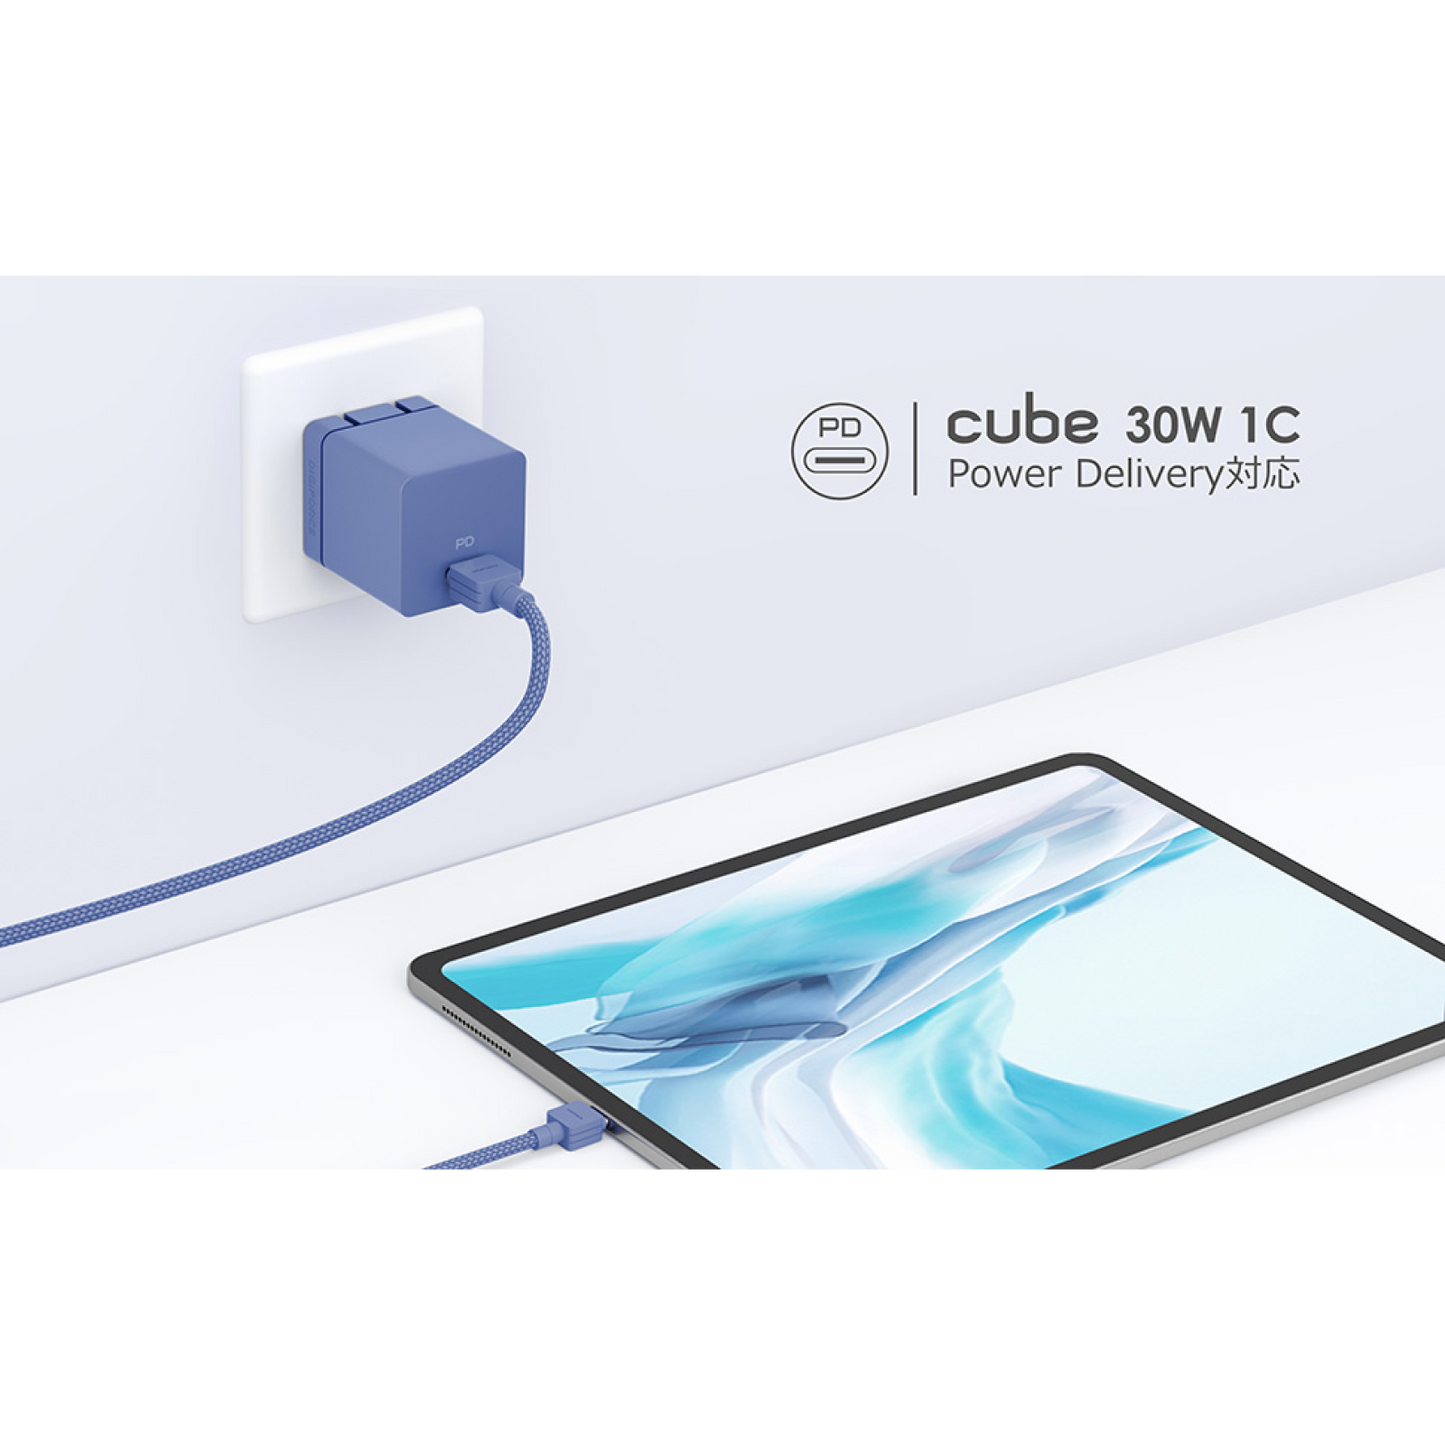 【cube 30W 1C】ACアダプター 急速充電 スマートフォン iPhone android iPad androidタブレット Windowsタブレット タブレット端末 D0081